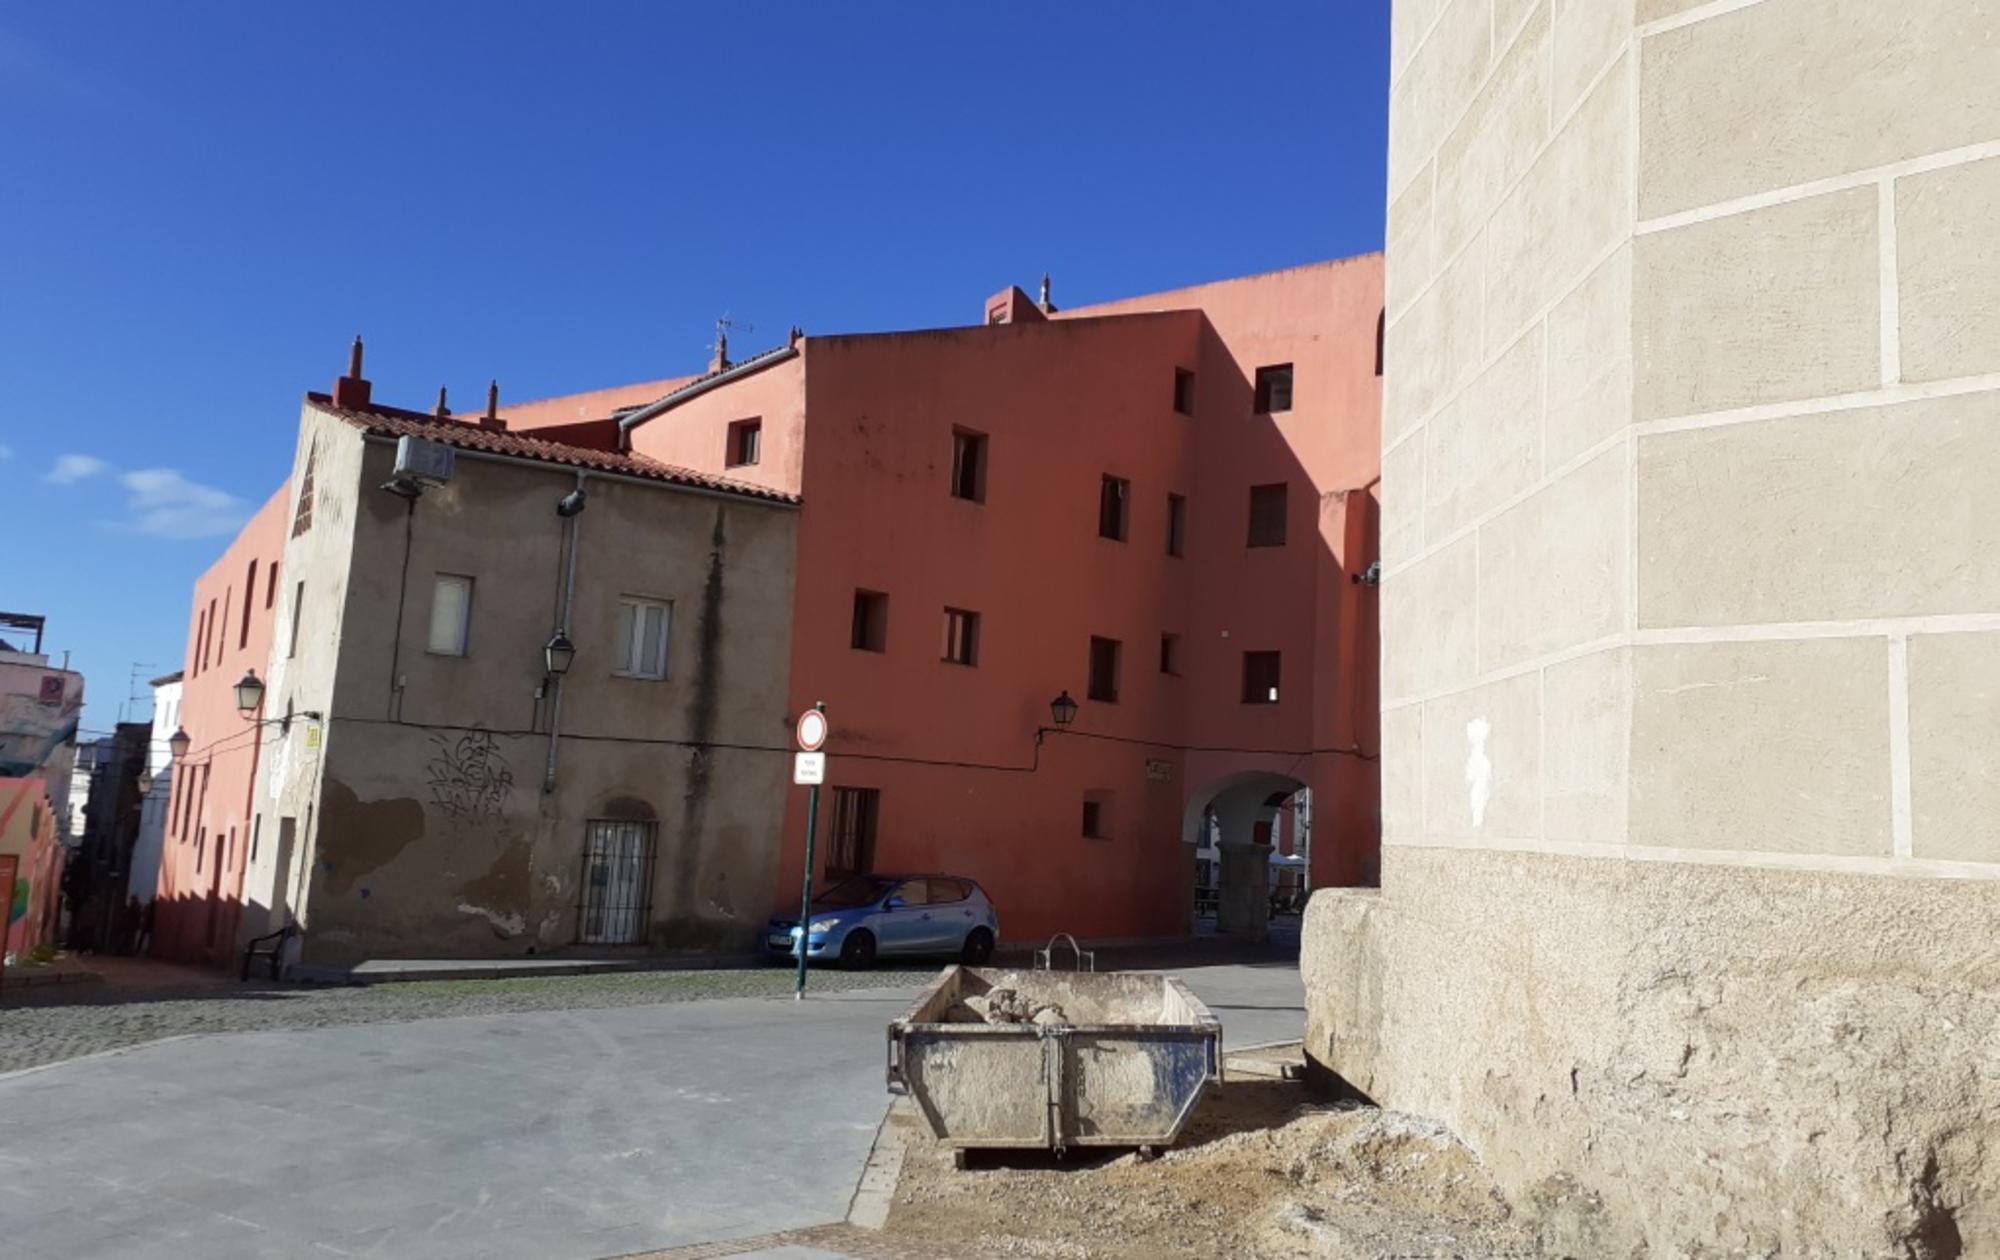 Escuela laica de Badajoz